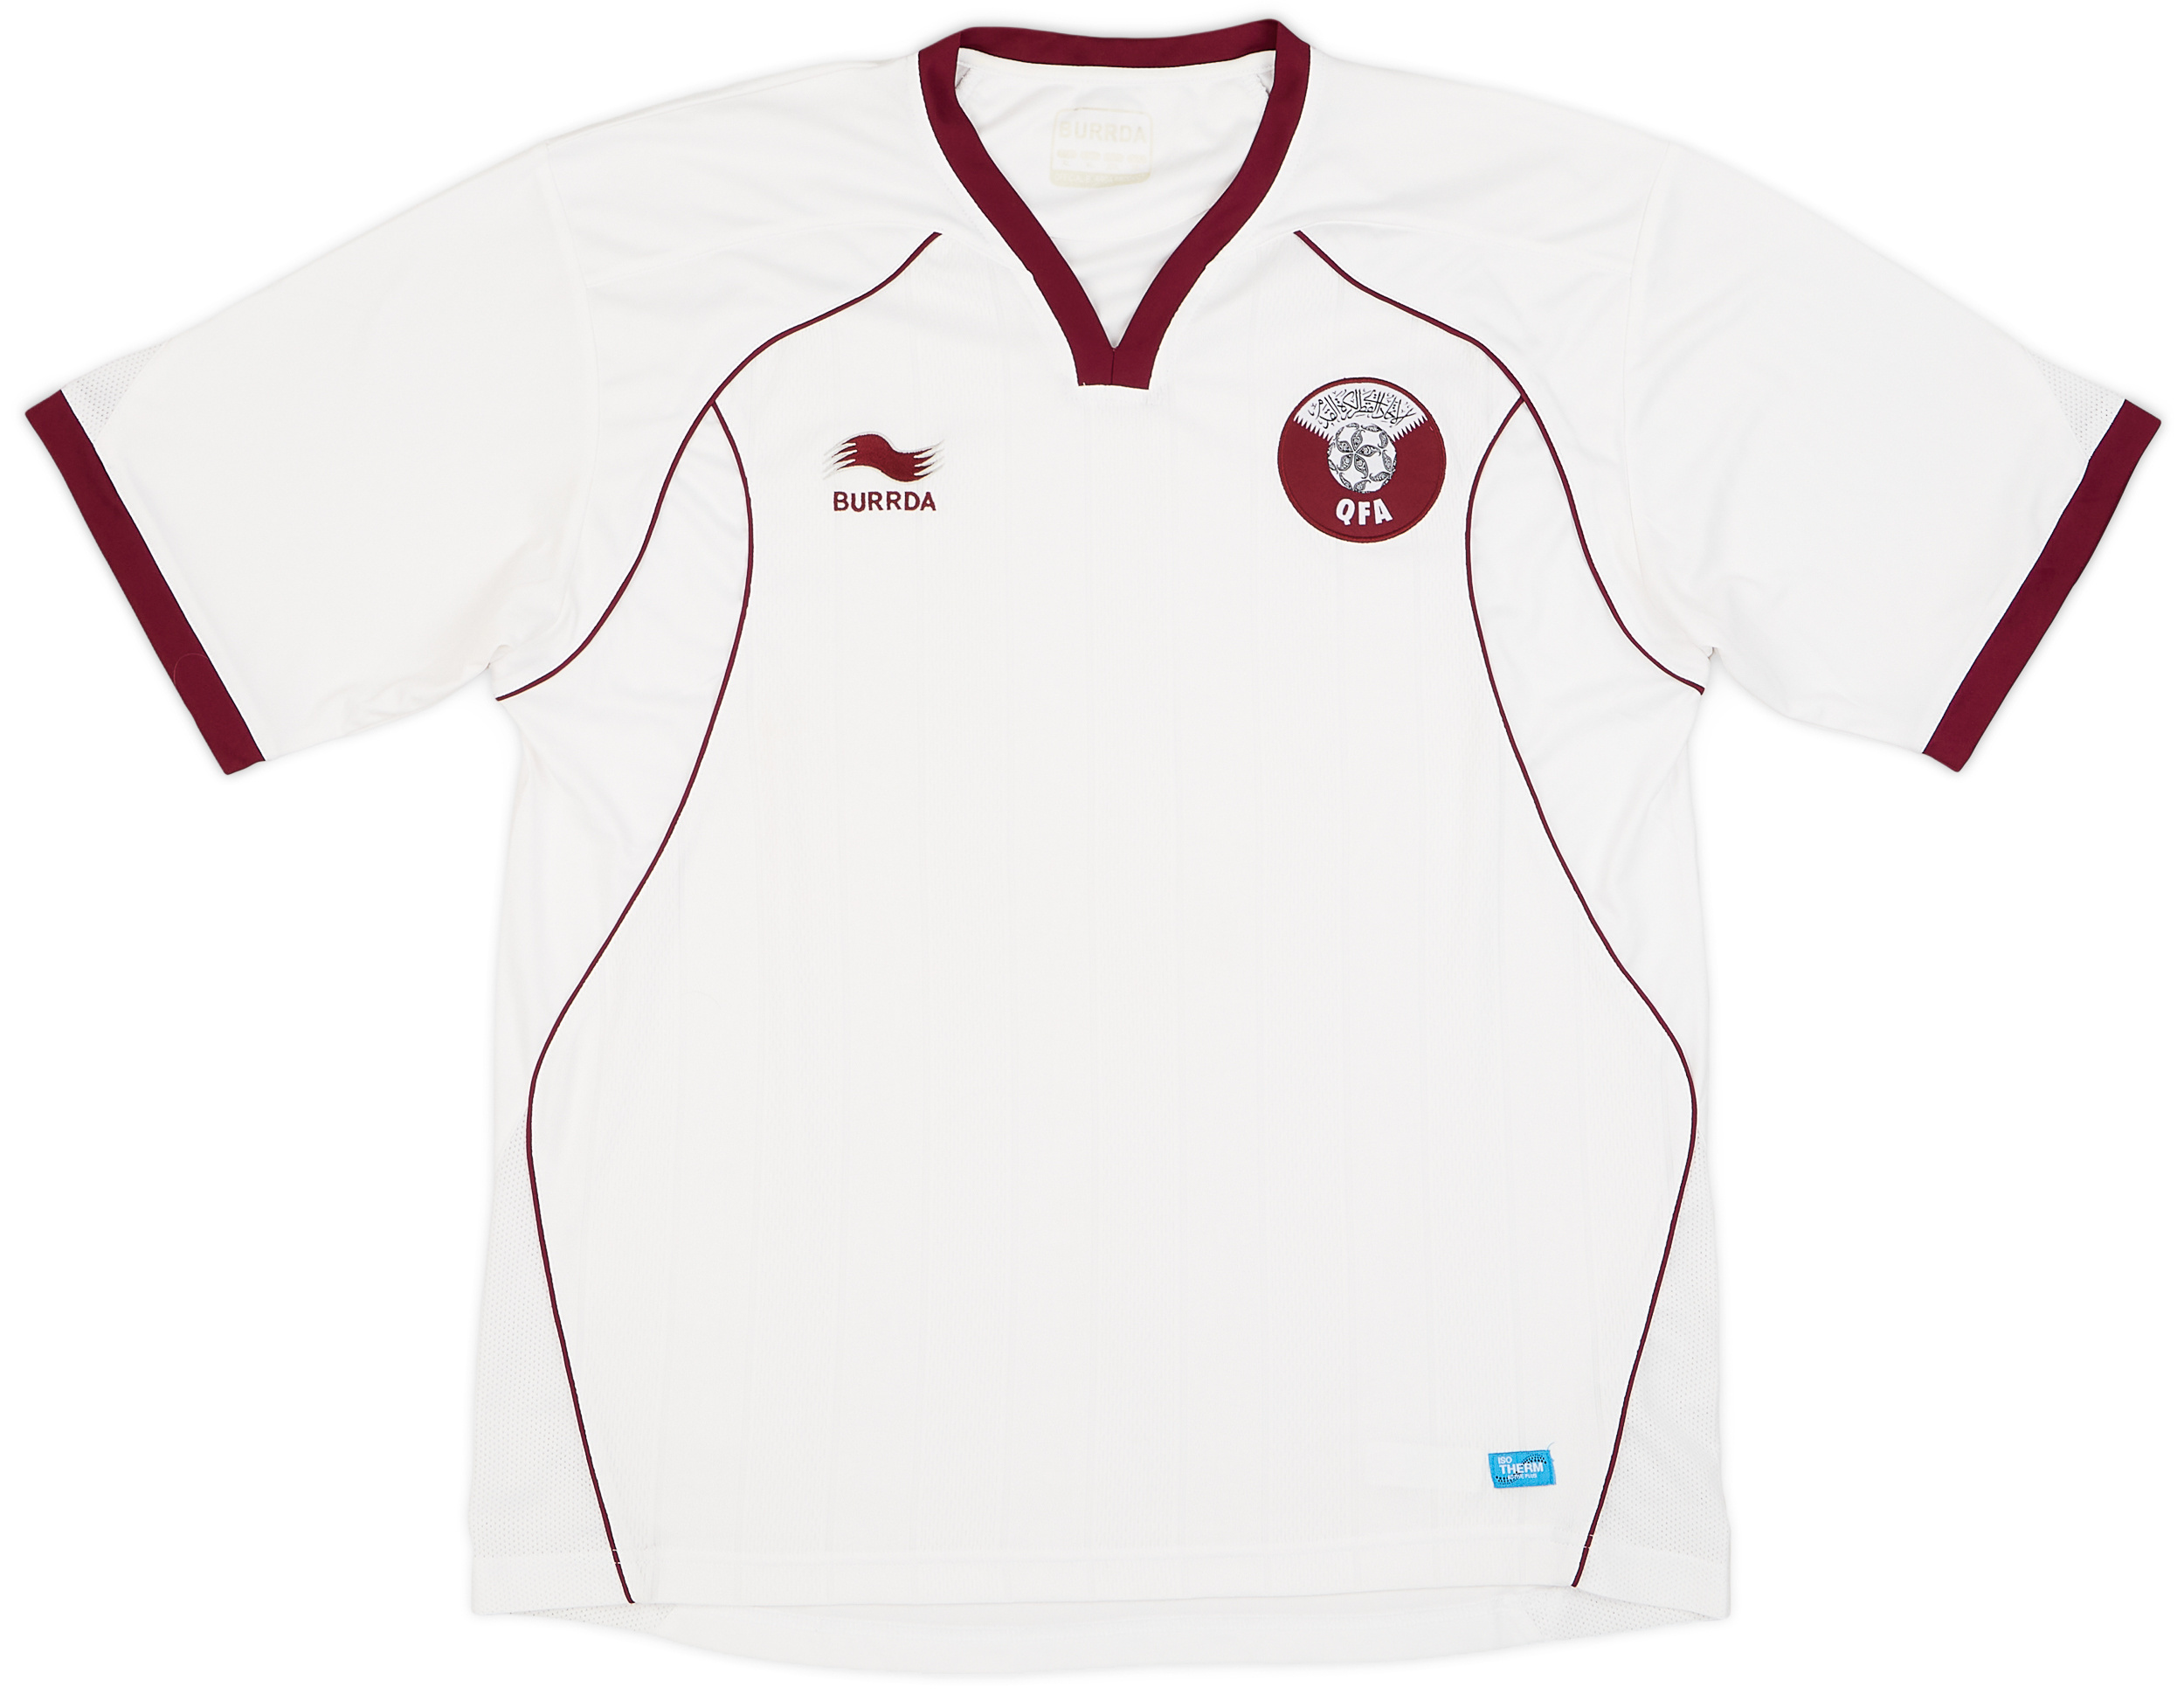 Retro Qatar Shirt